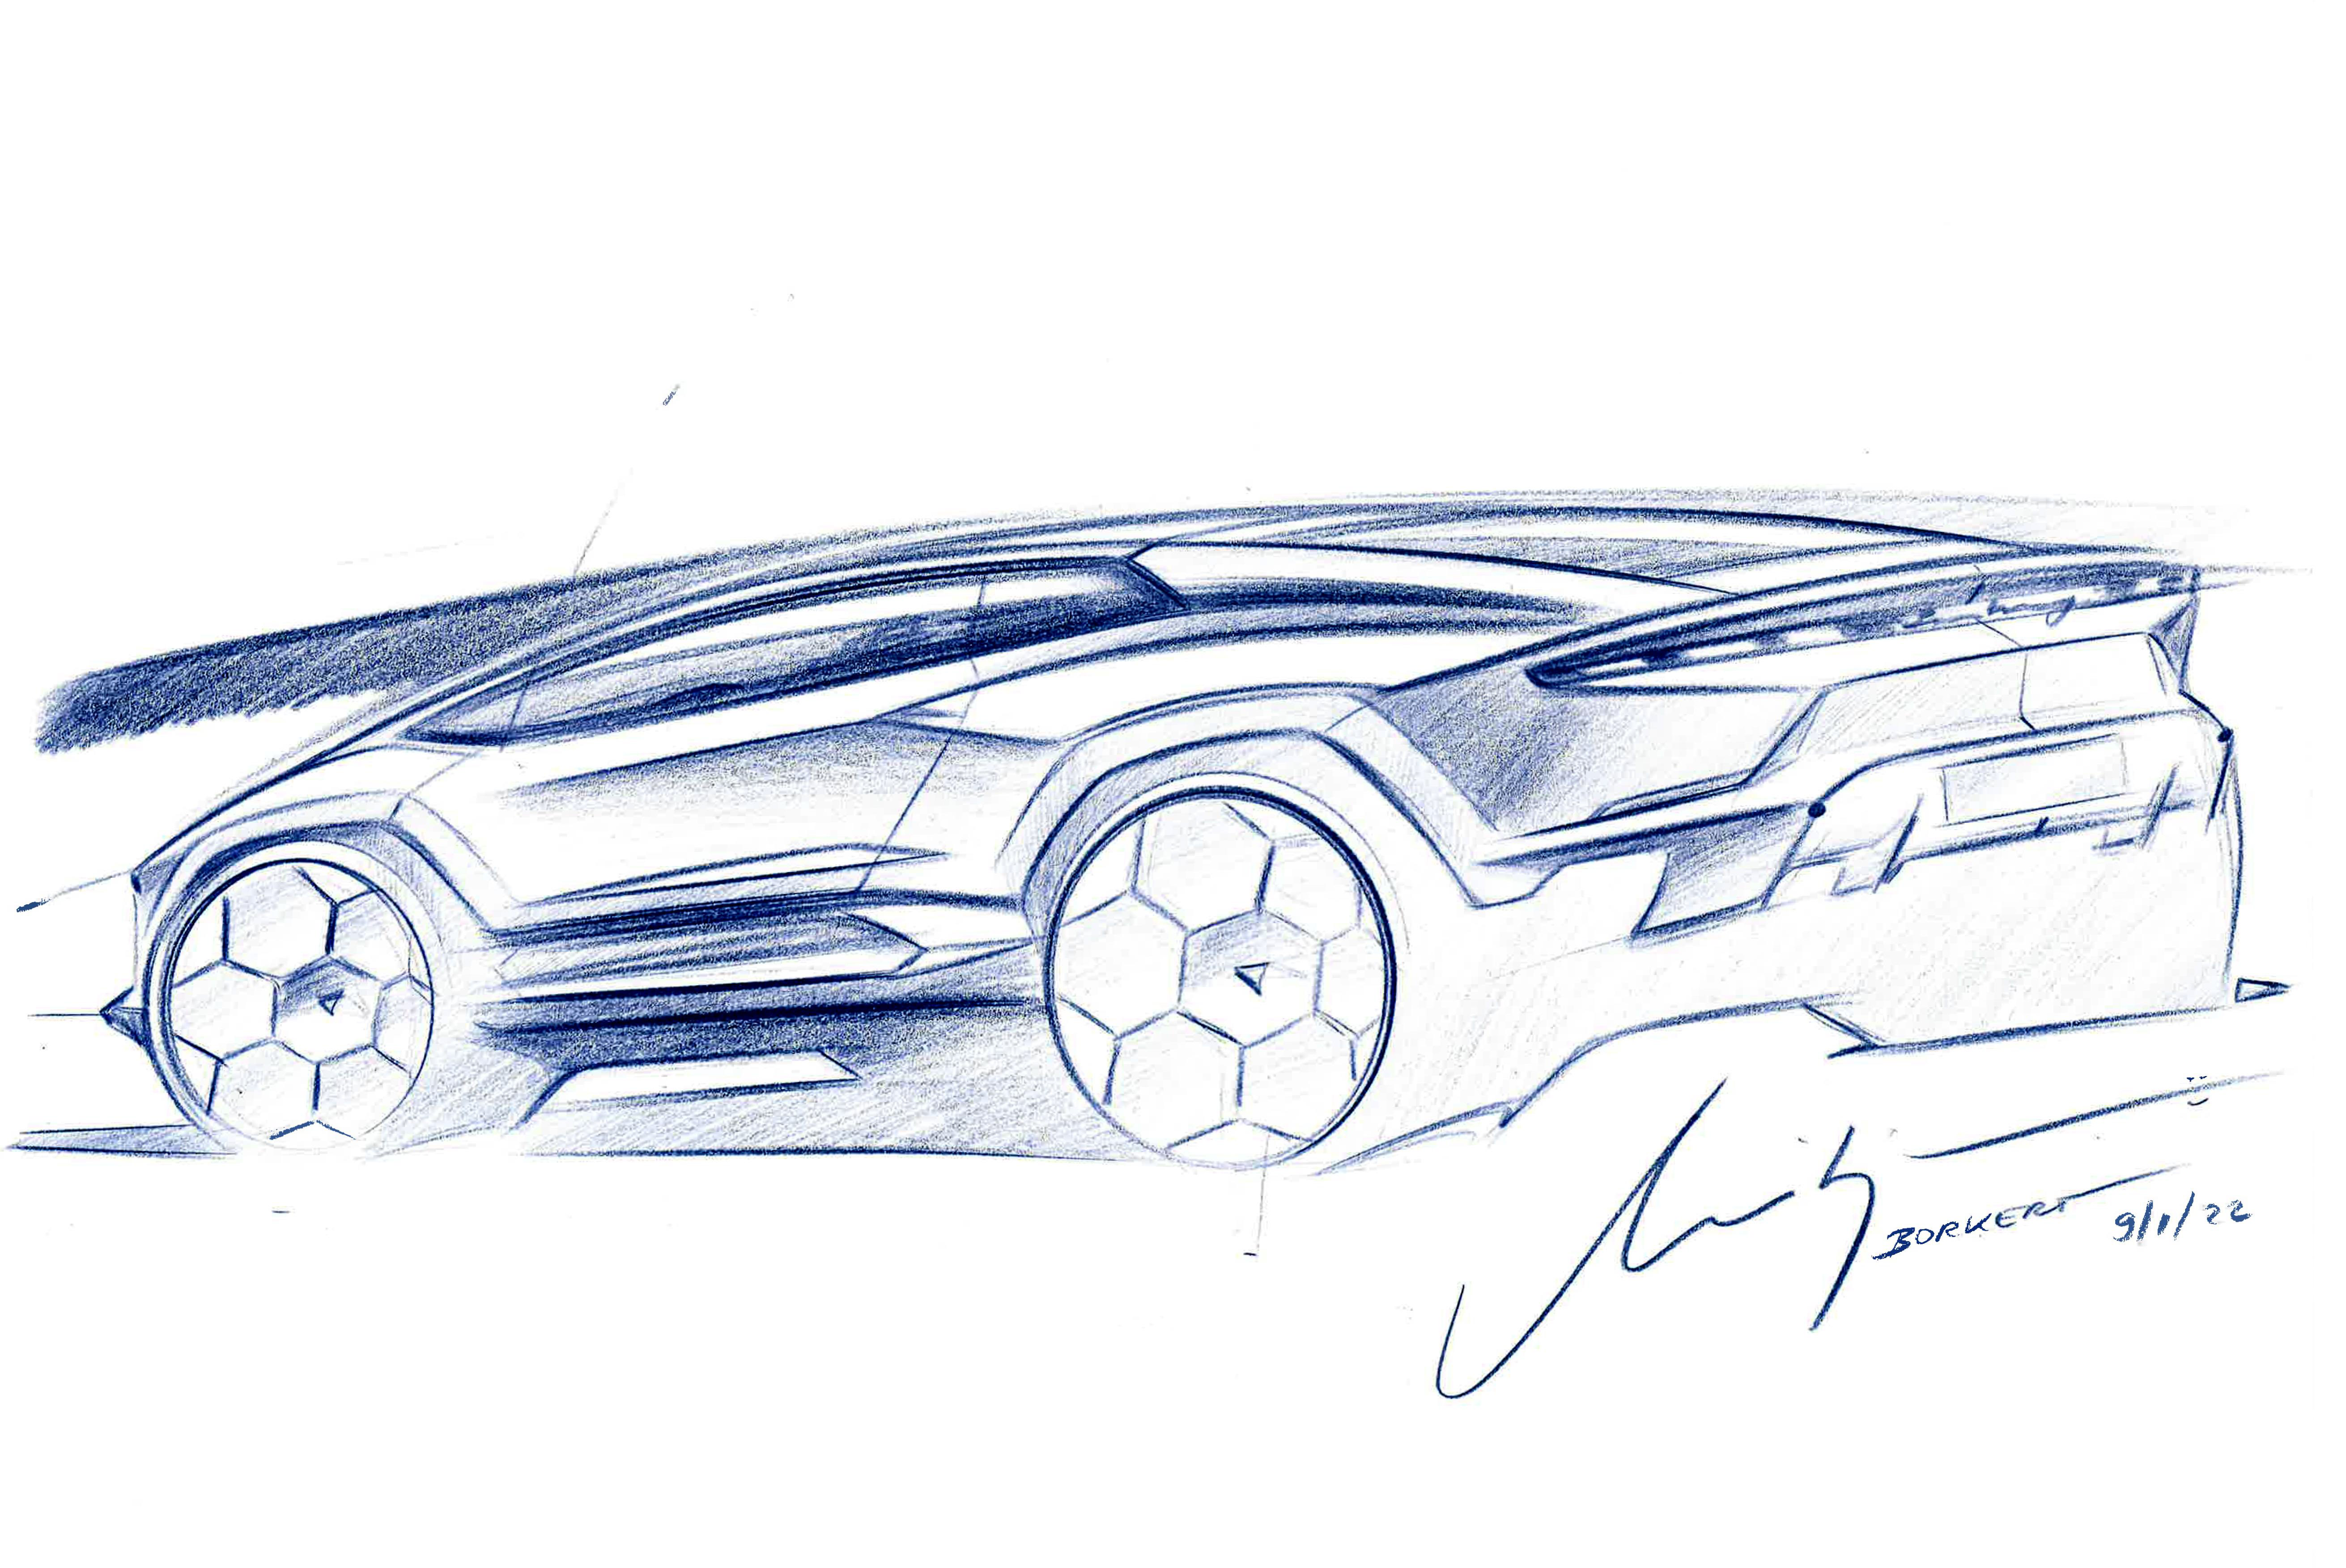 Sprot Car Lamborghini Aventador Sketch. 3D Illustration. Stock Illustration  - Illustration of speed, etching: 112090305